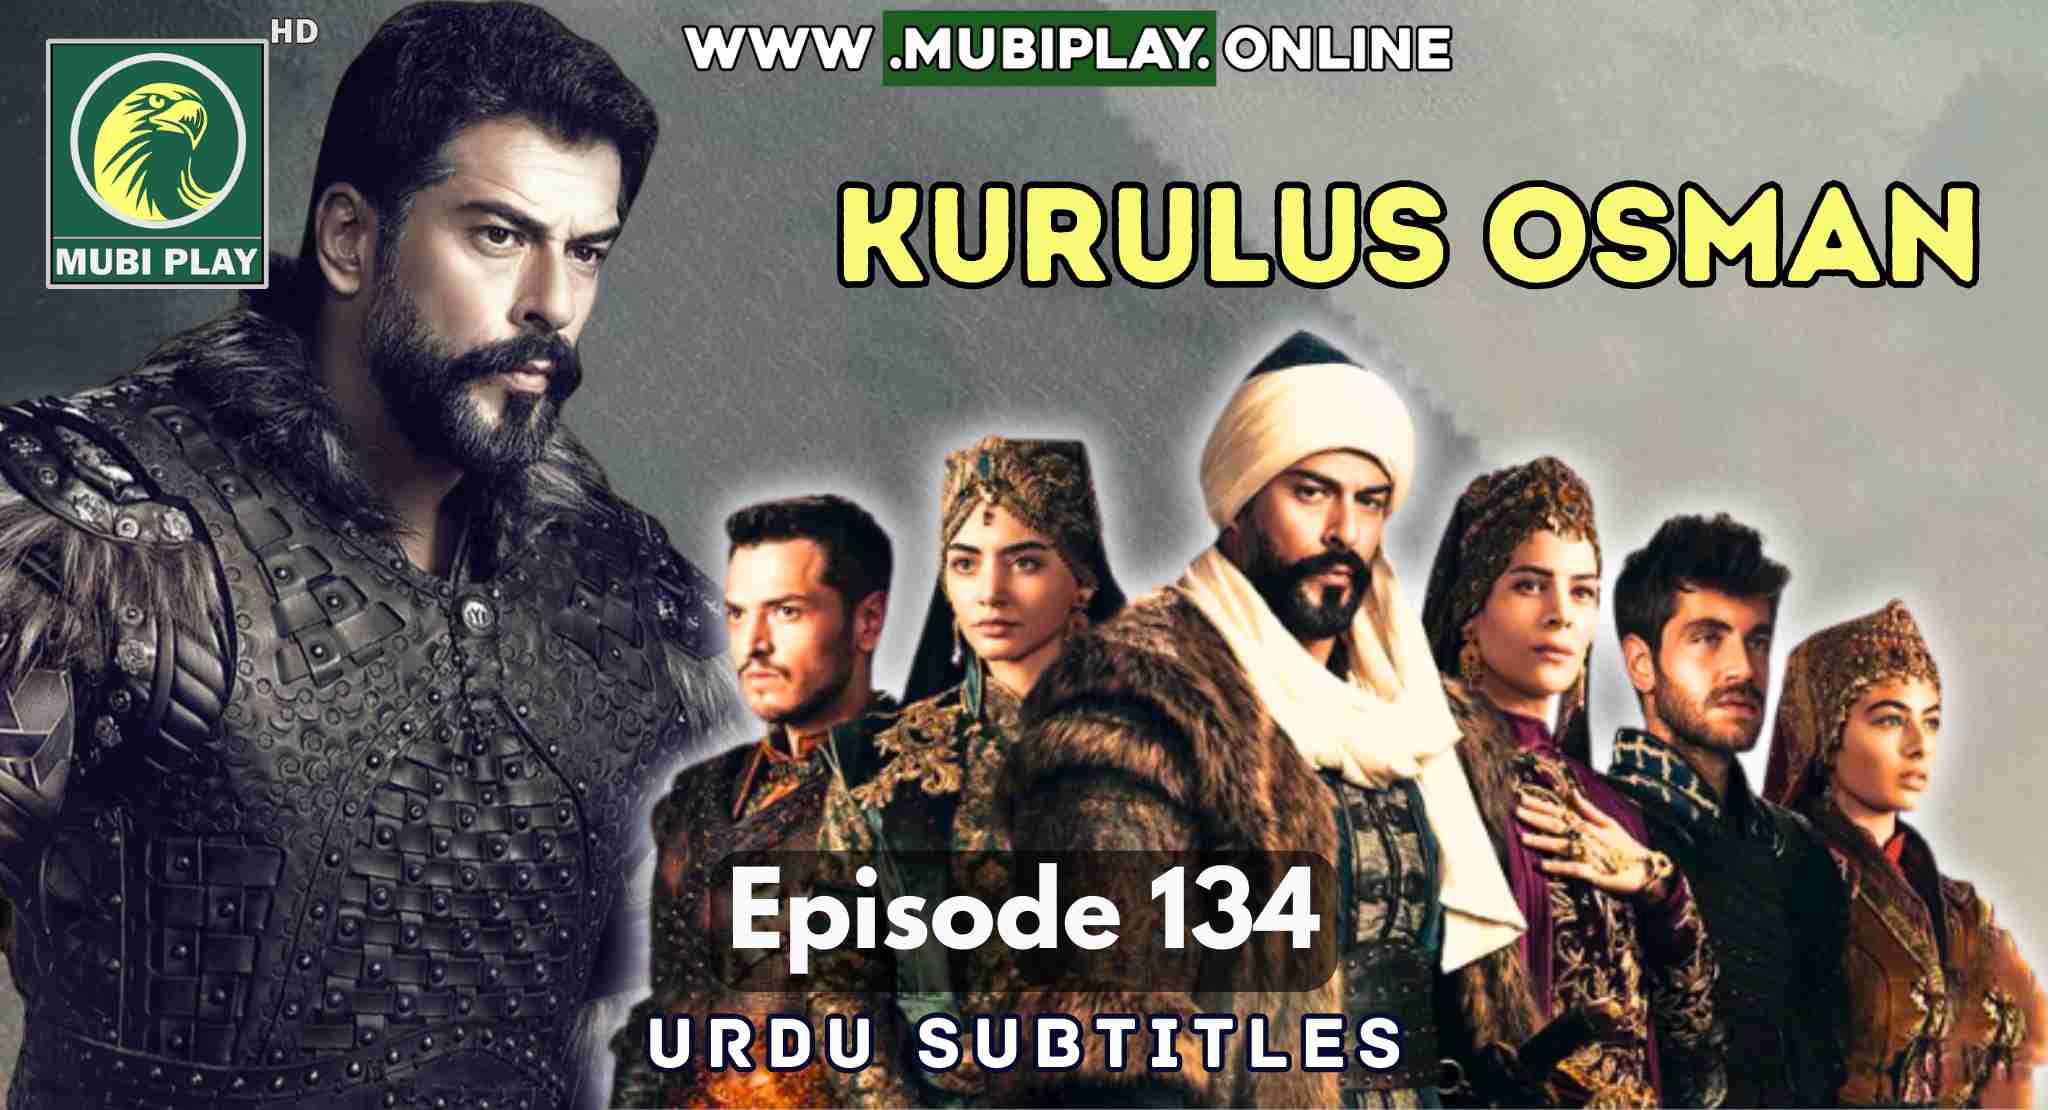 Kurulus Osman Episode 134 with Urdu Subtitles by Mubi Play